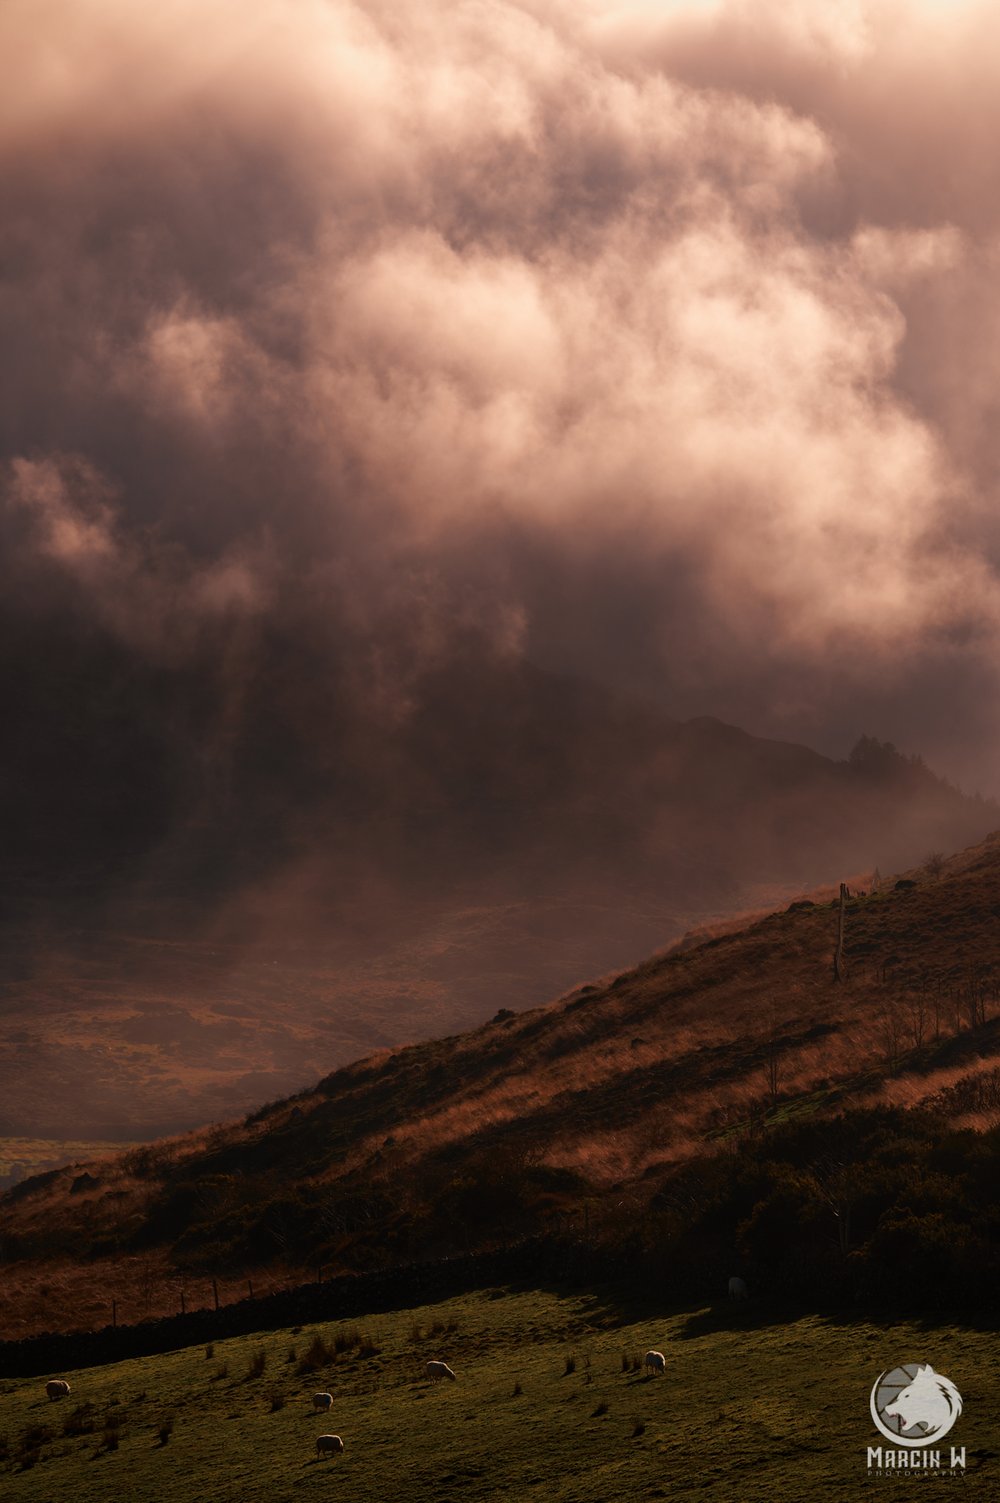 Carlingford_Cooley_Mountains_Light_ireland__Marcin_W_Photography_03.03.24 1.jpg